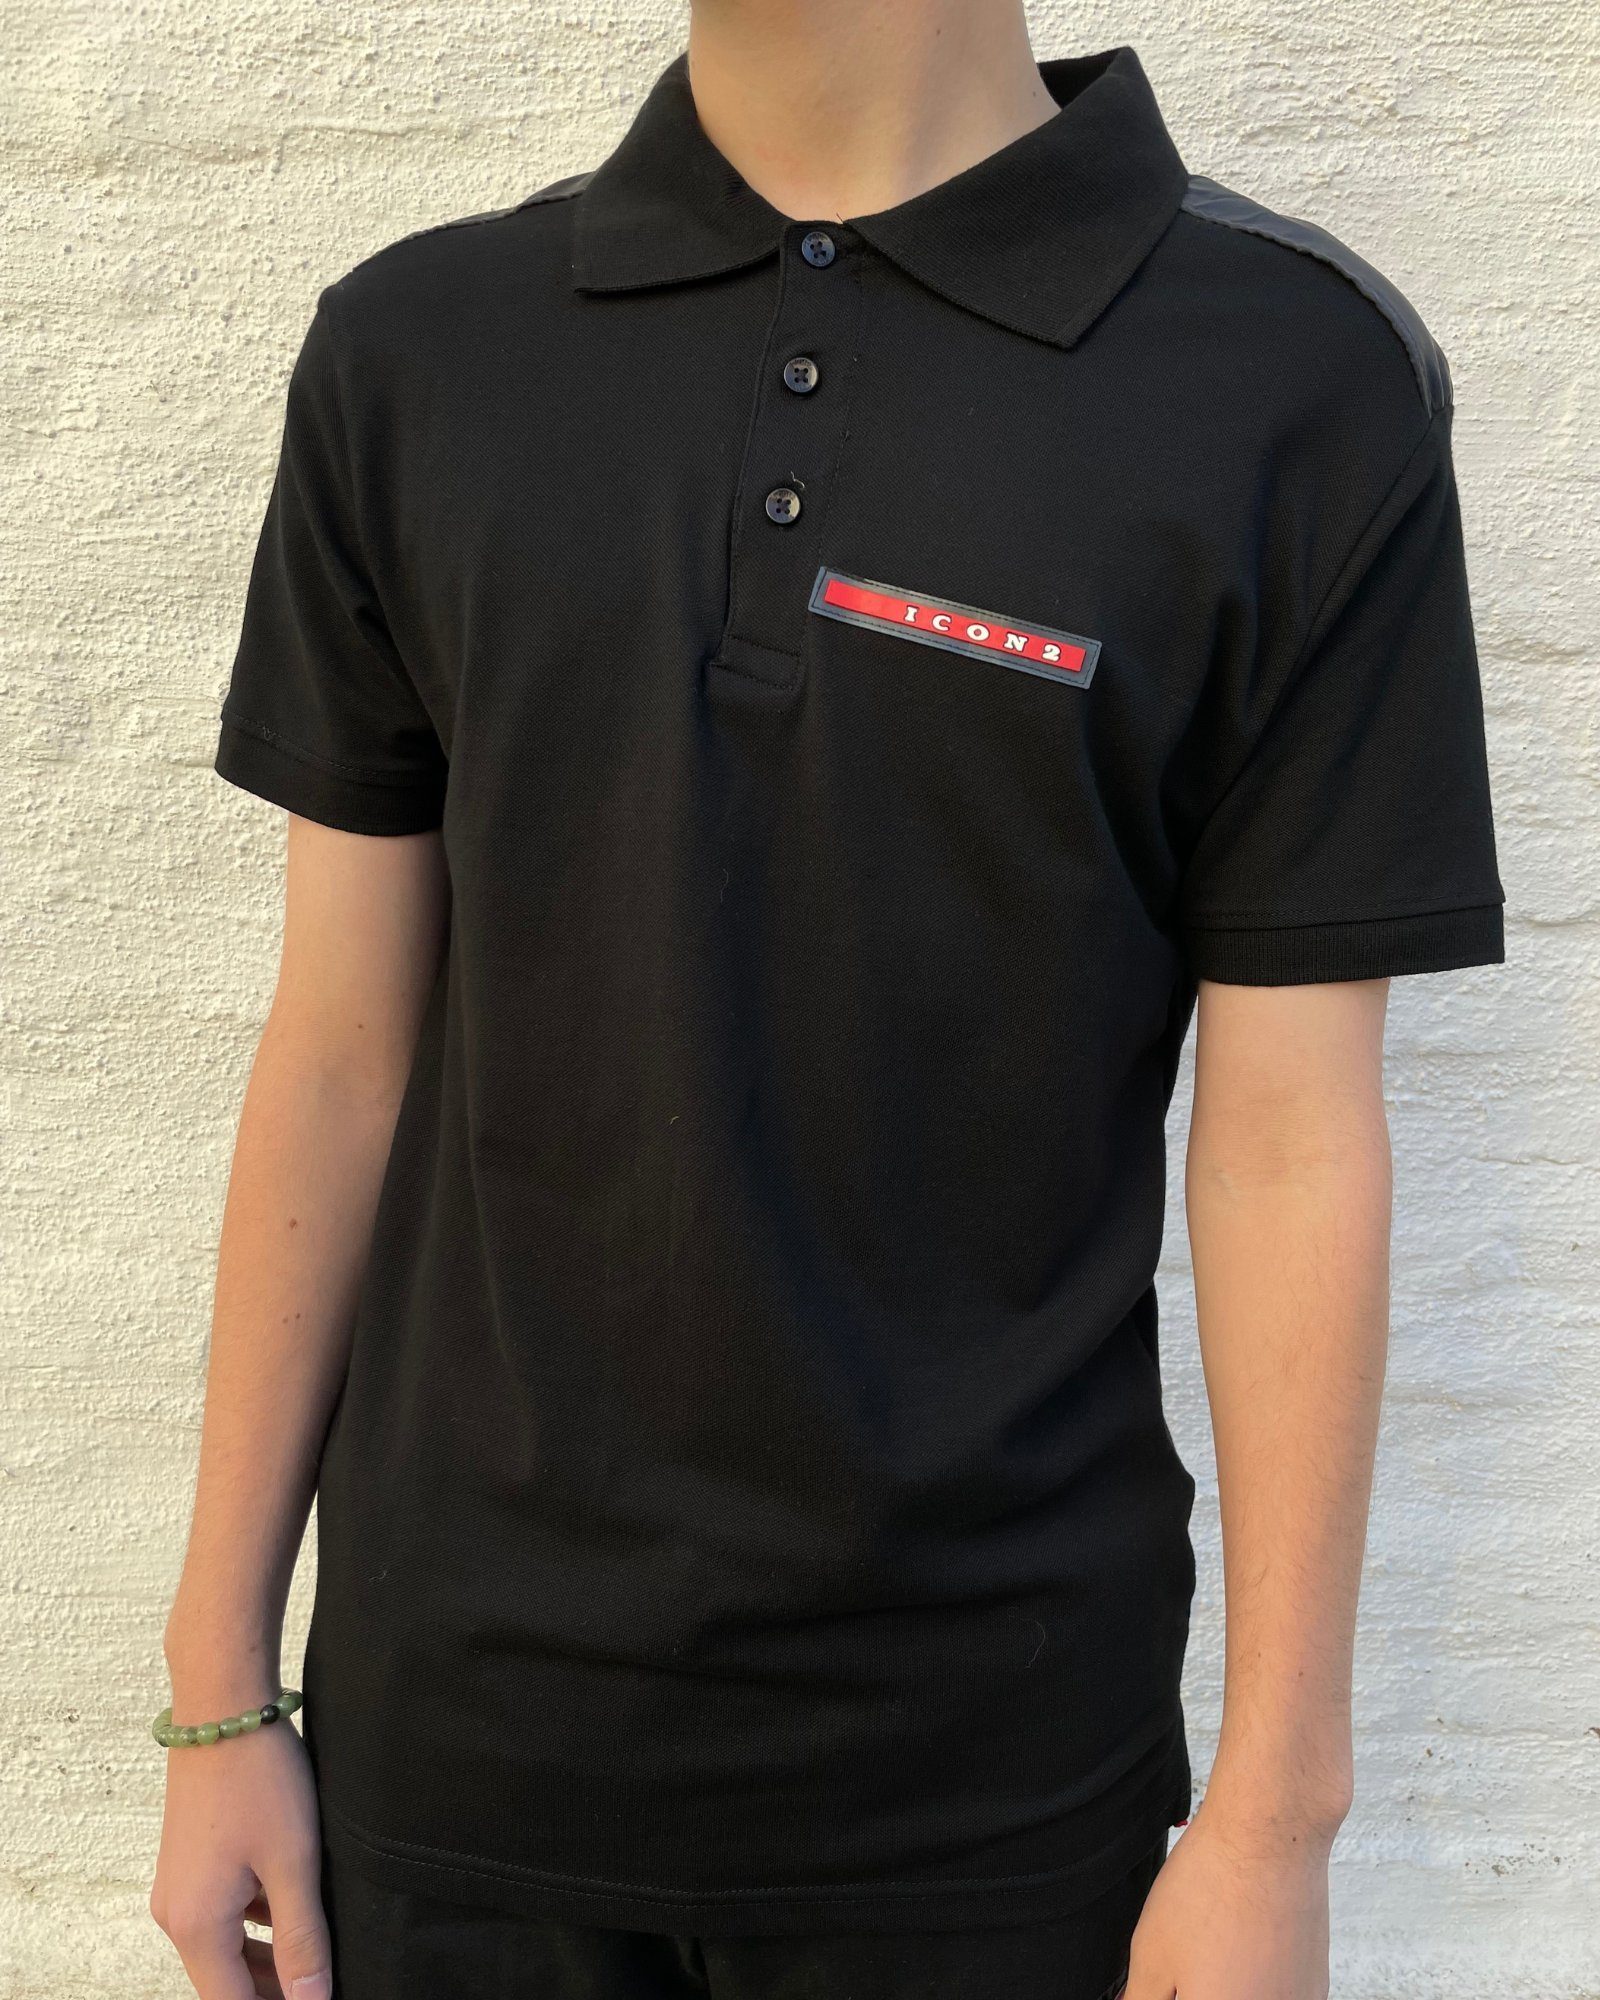 Shirt ITALY Gr. L S - - VIBES - Poloshirt in kurzarm erhältlich schwarz ELIO - Polo